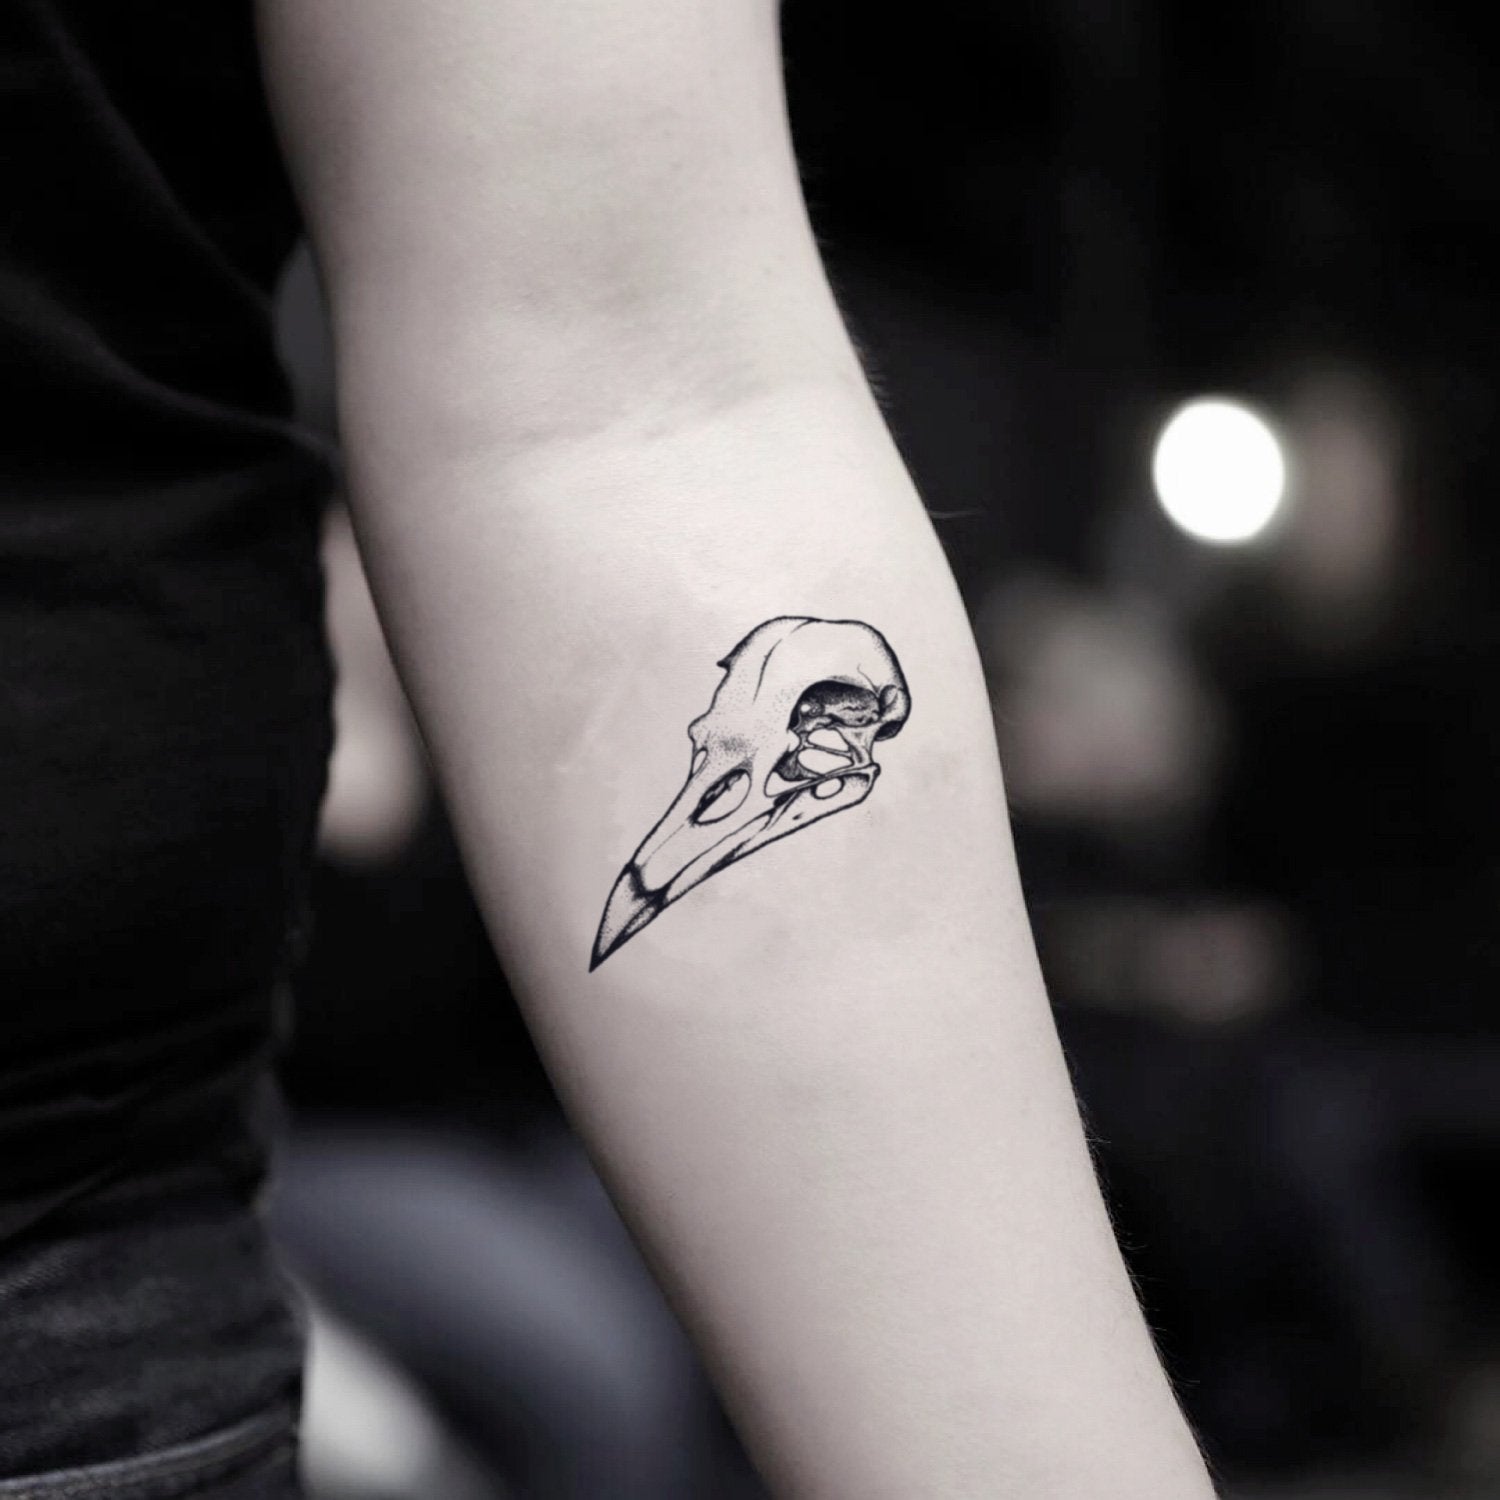 fake small bird skull skeleton animal temporary tattoo sticker design idea on inner arm